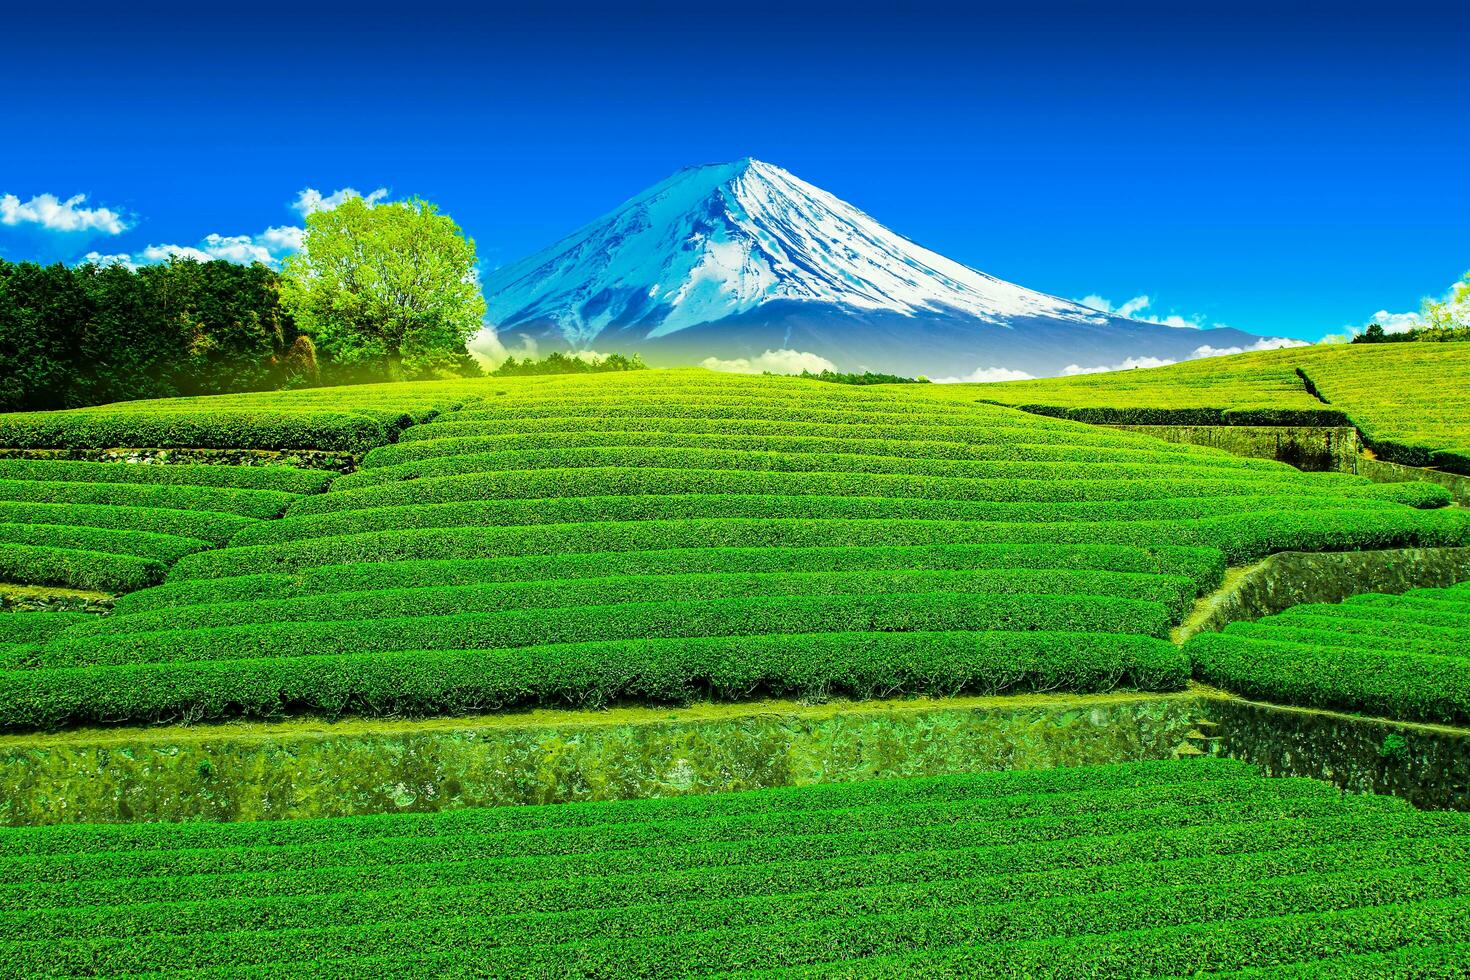 Tea plantation on the back overlooking Mount Fuji with clear sky in shizuoka, obuchi sasaba, japan photo